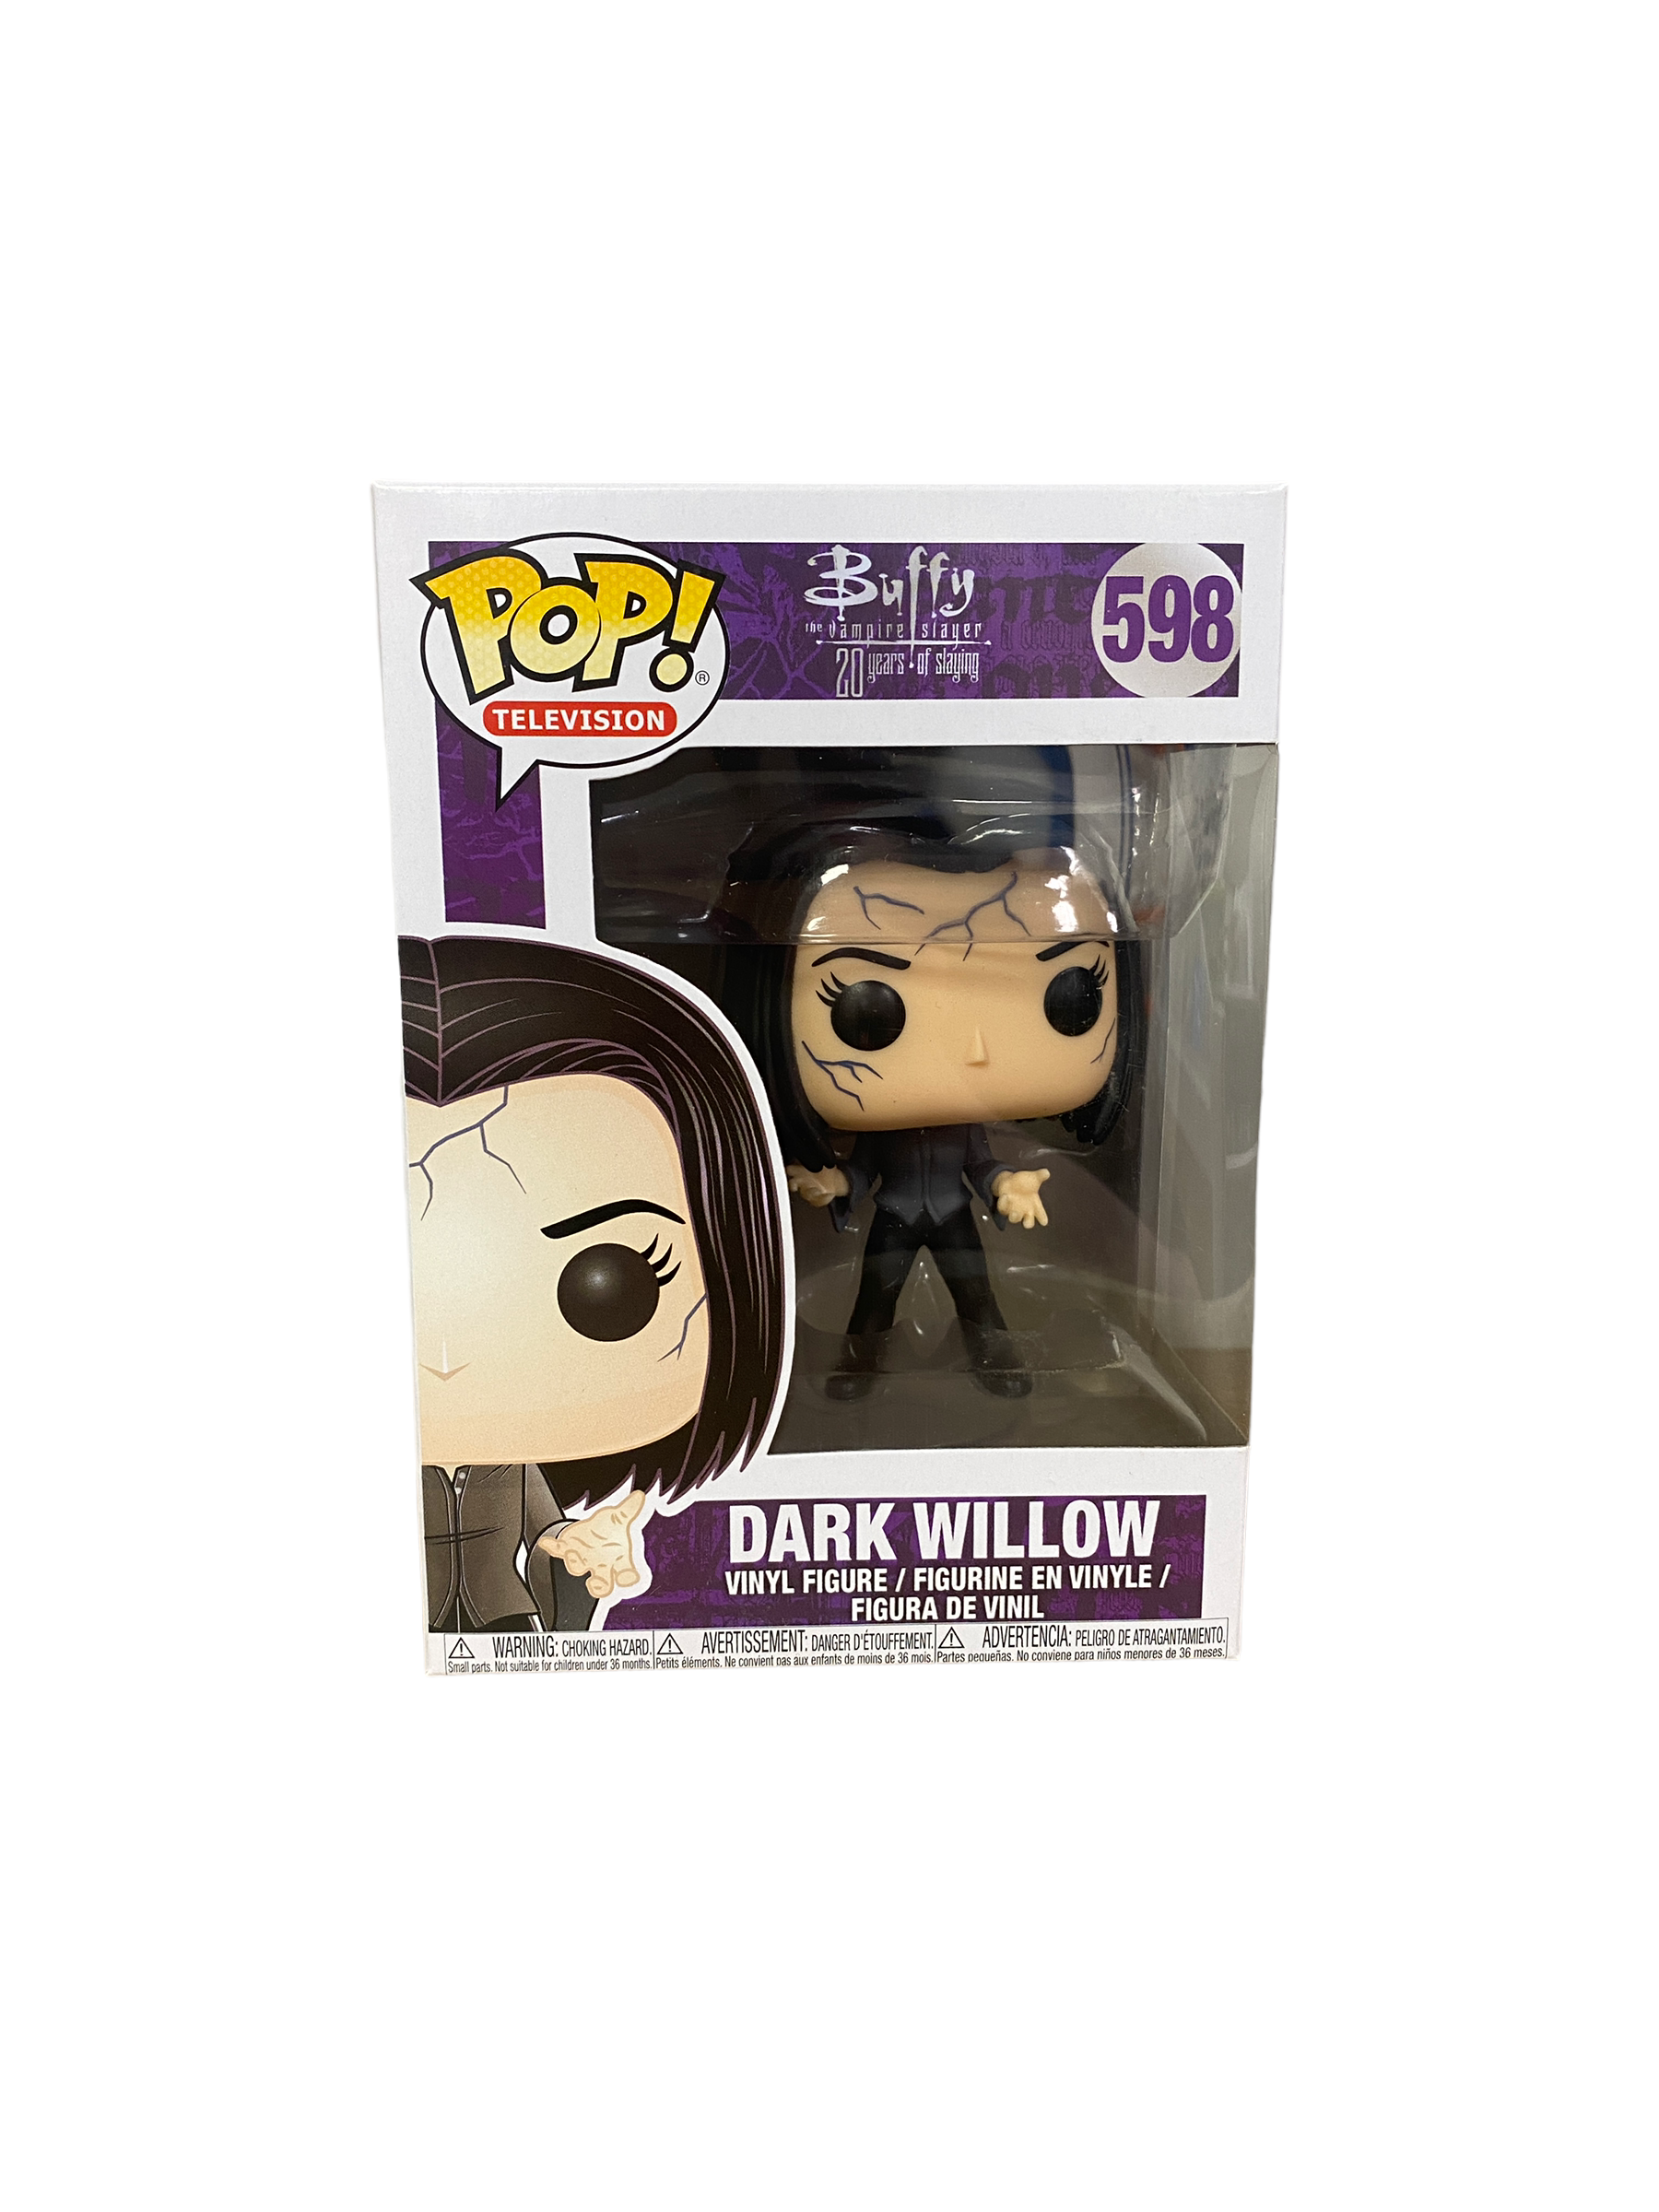 Dark Willow #598 Funko Pop! - Buffy The Vampire Slayer - 2017 Pop! - Condition 8.5/10